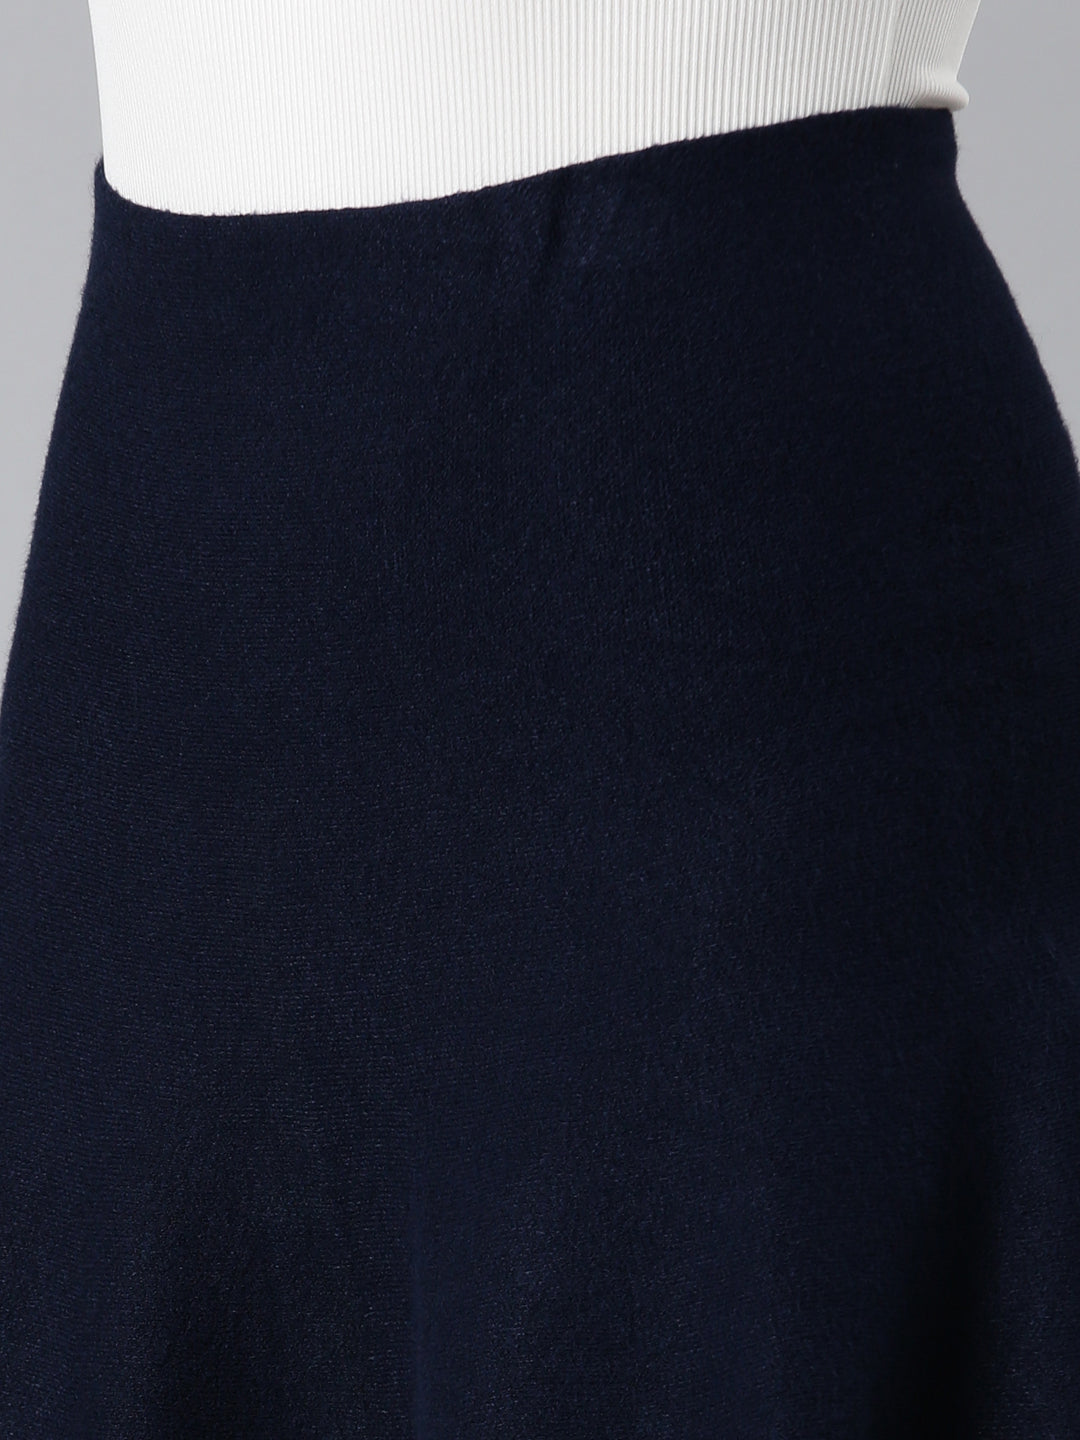 Women Navy Blue Solid Pencil Skirt